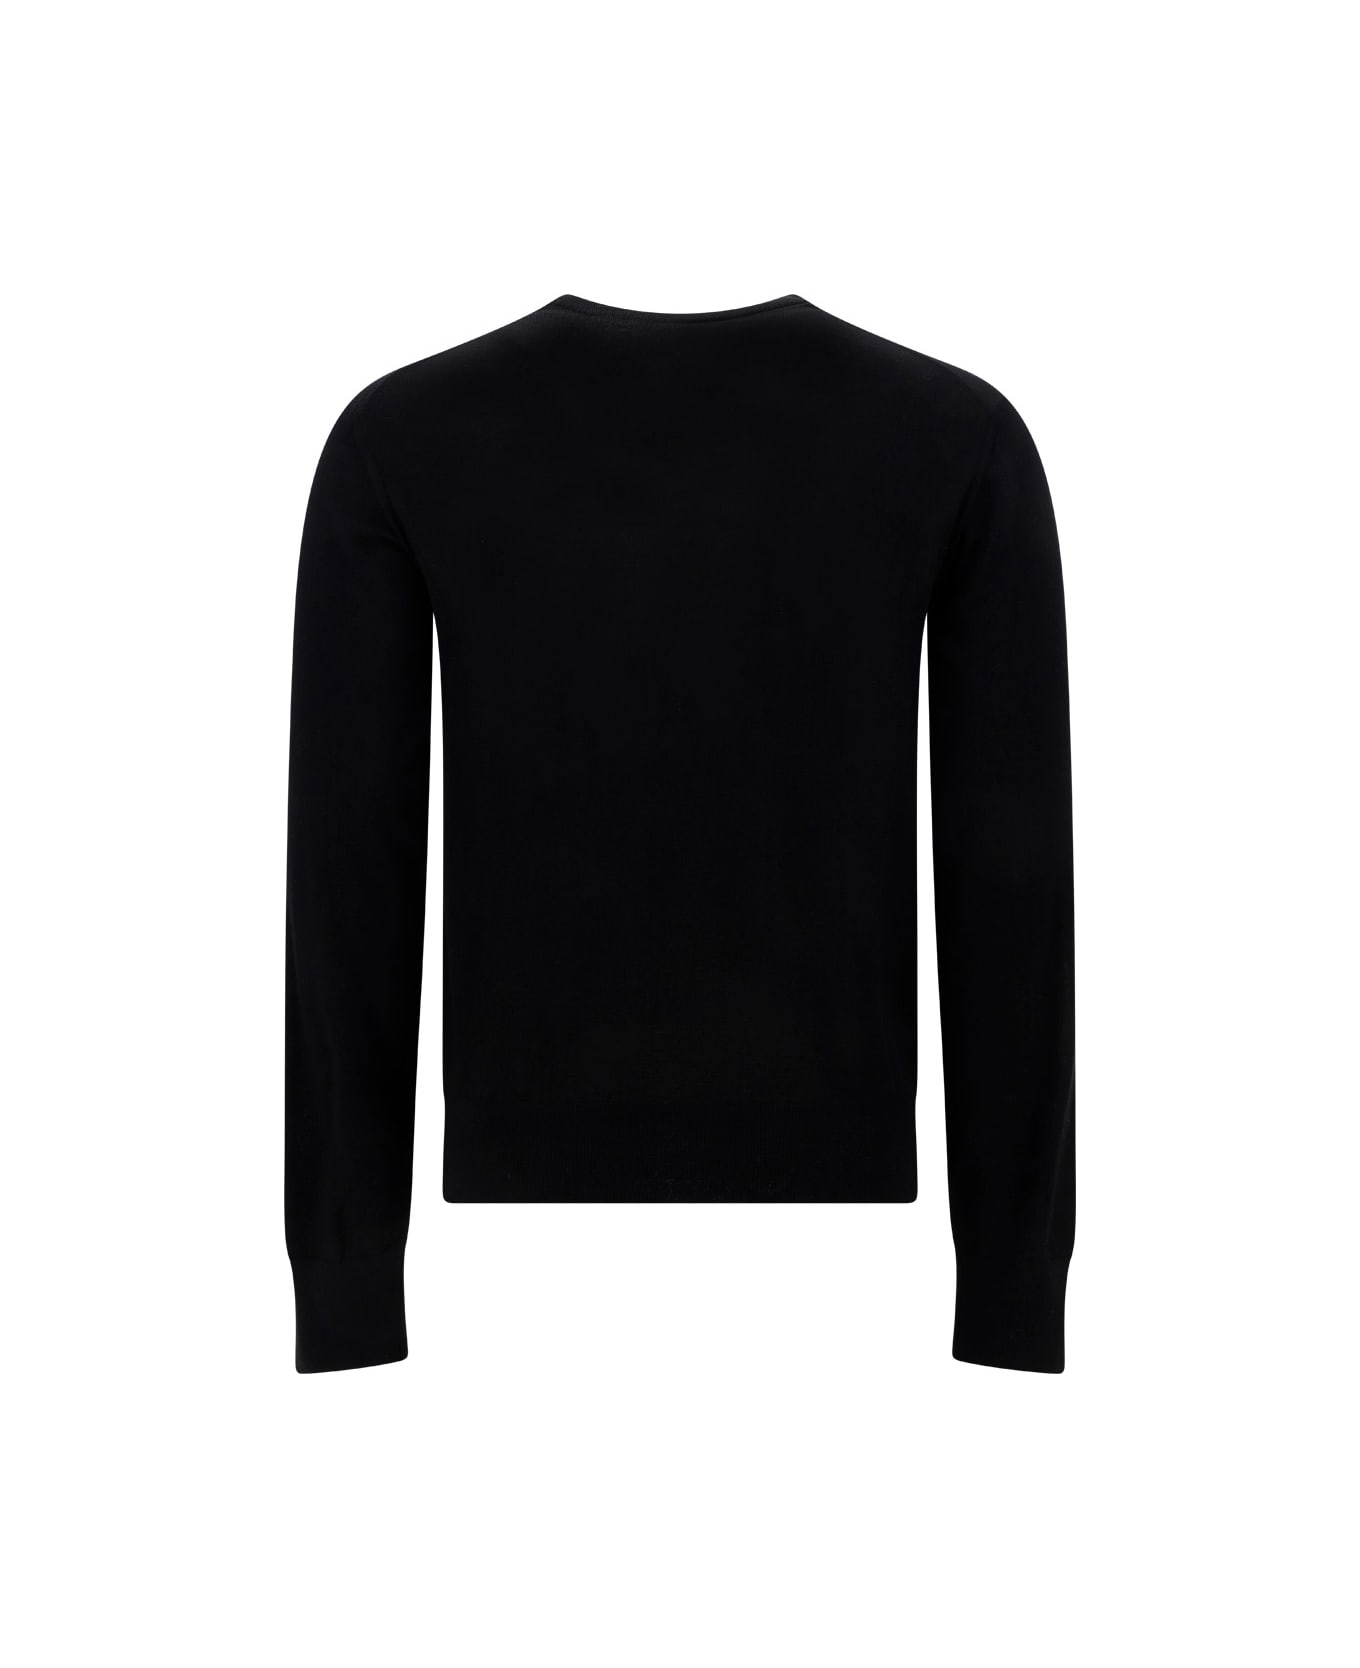 Dolce & Gabbana Sweater - Variante Abbinata ニットウェア